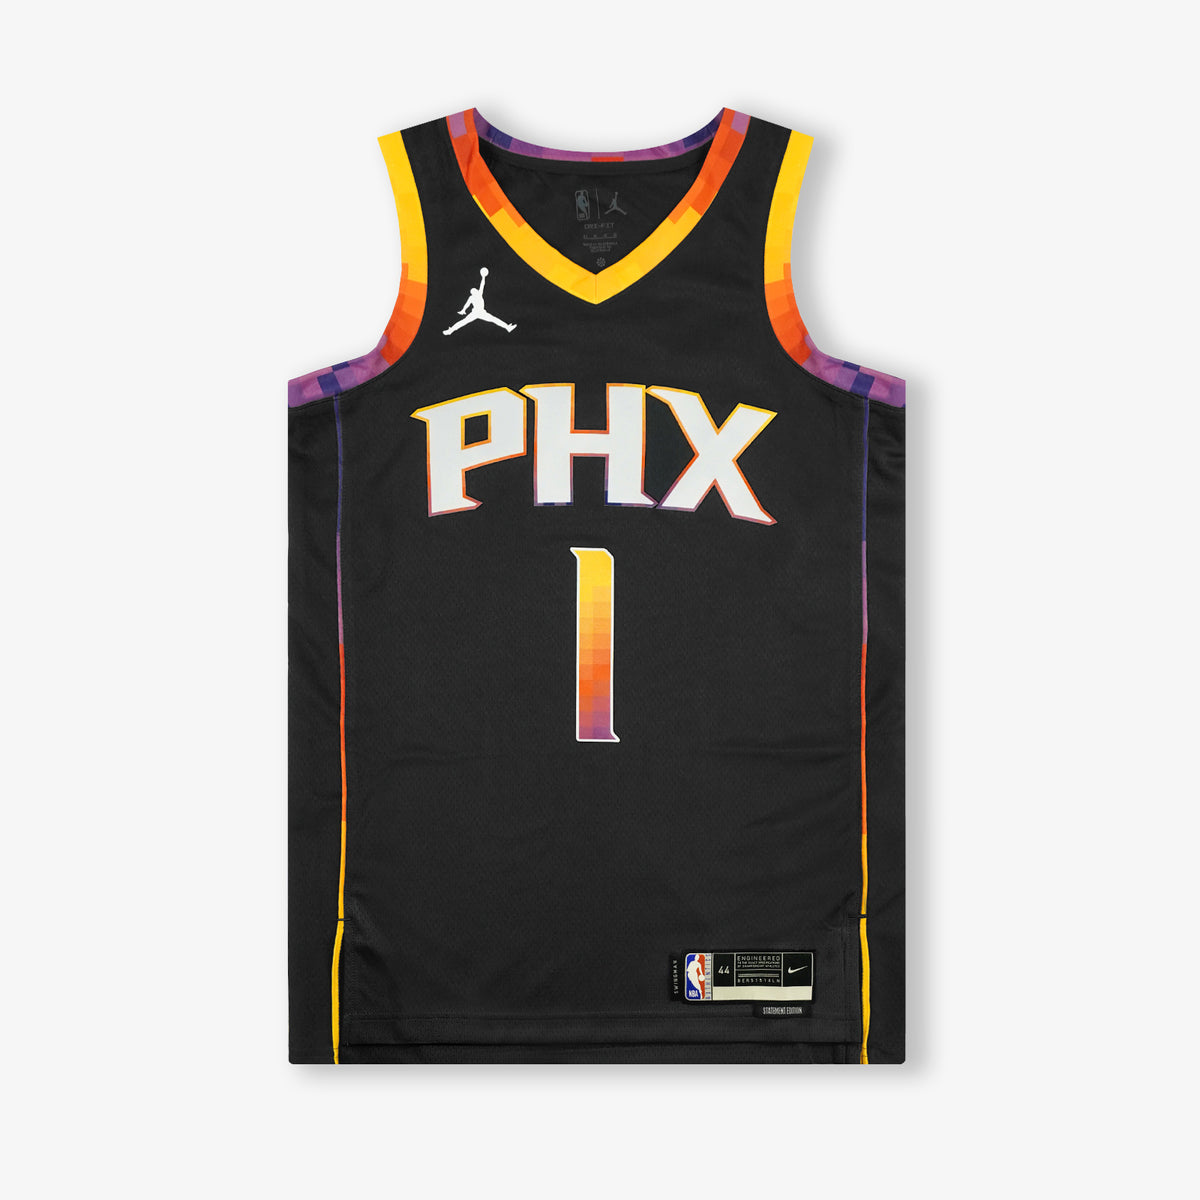 Men's Nike Dri-Fit NBA Authentics Phoenix Suns Basketball